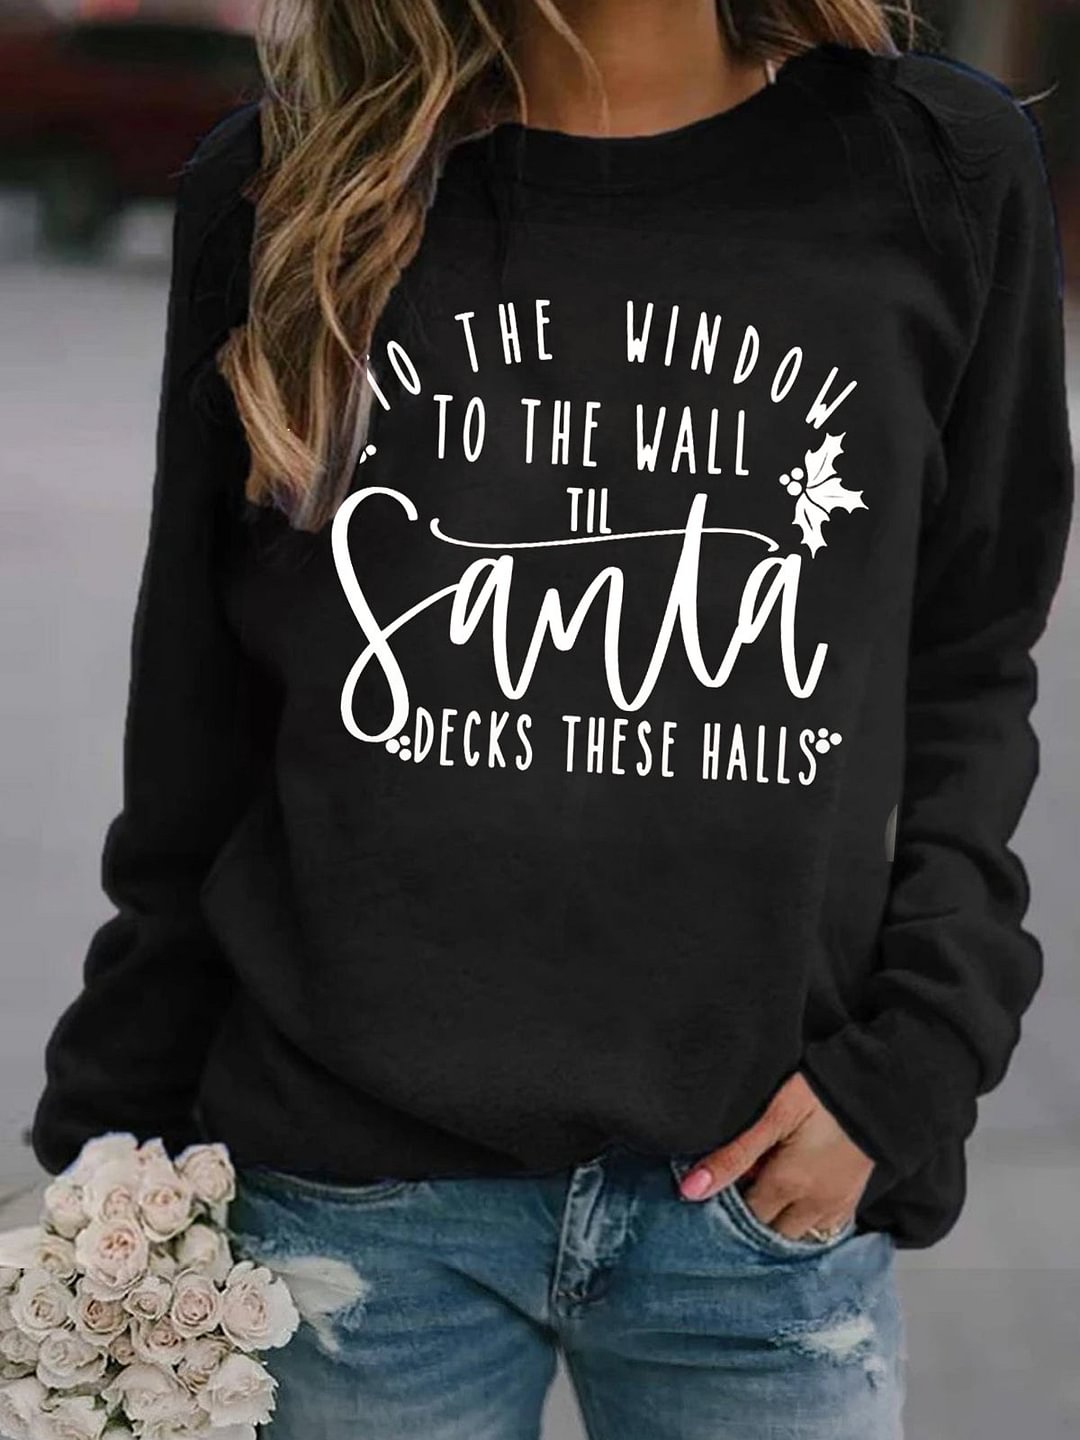 To the Window To the Wall Till Santa Decks These Halls Sweatshirt